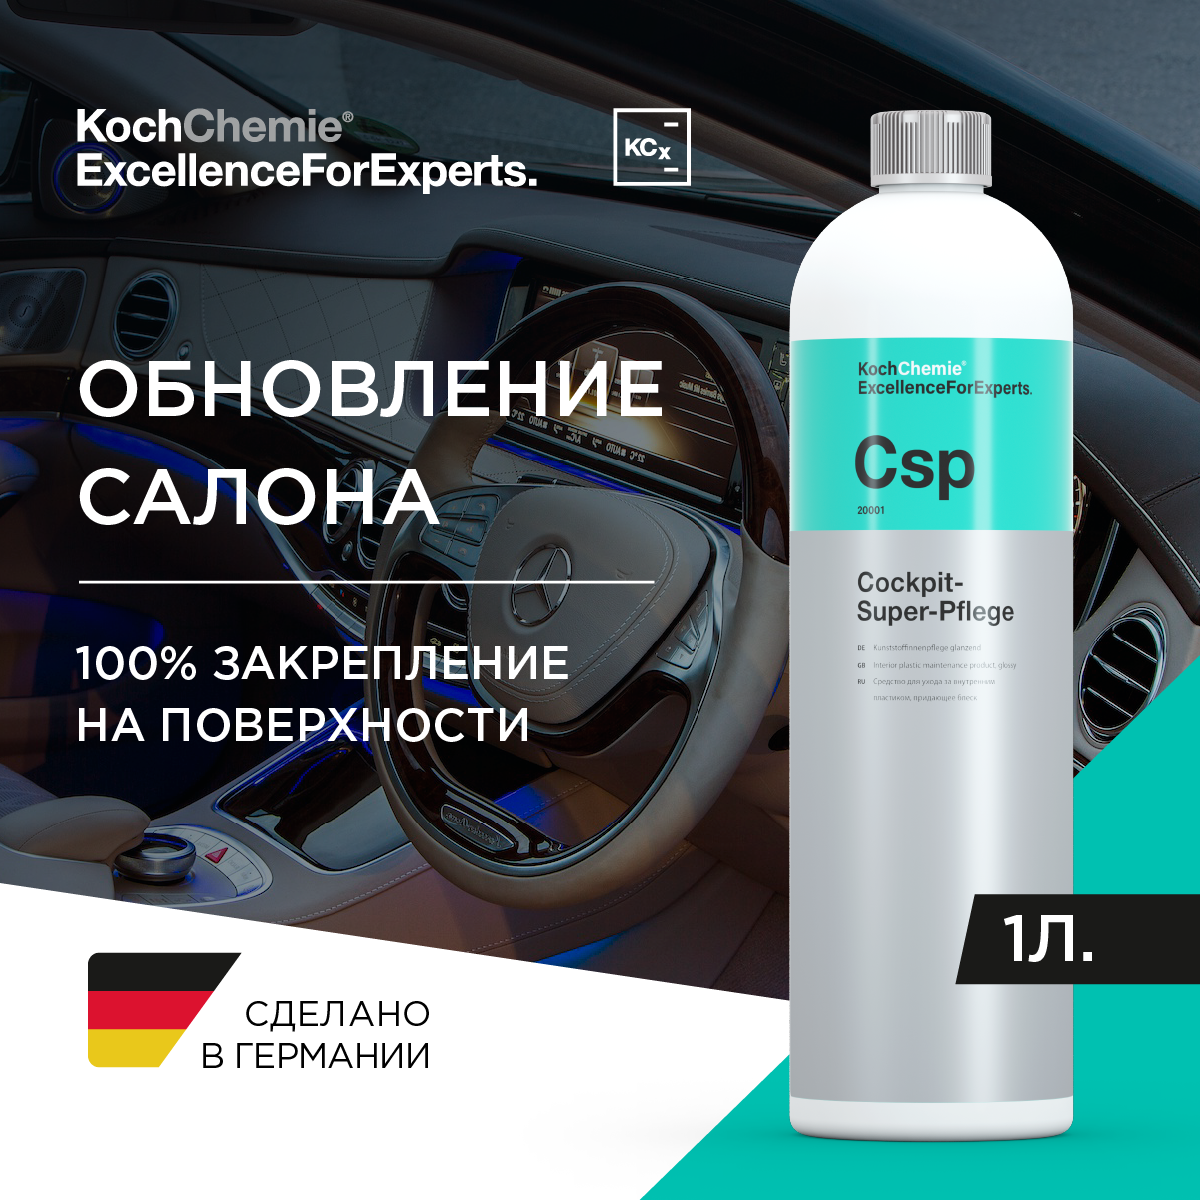 ExcellenceForExperts | Koch Chemie COCKPIT-SUPER-PFLEGE - Средство для ухода за пластмассовыми поверхностями внутри салона автомобиля. 1л